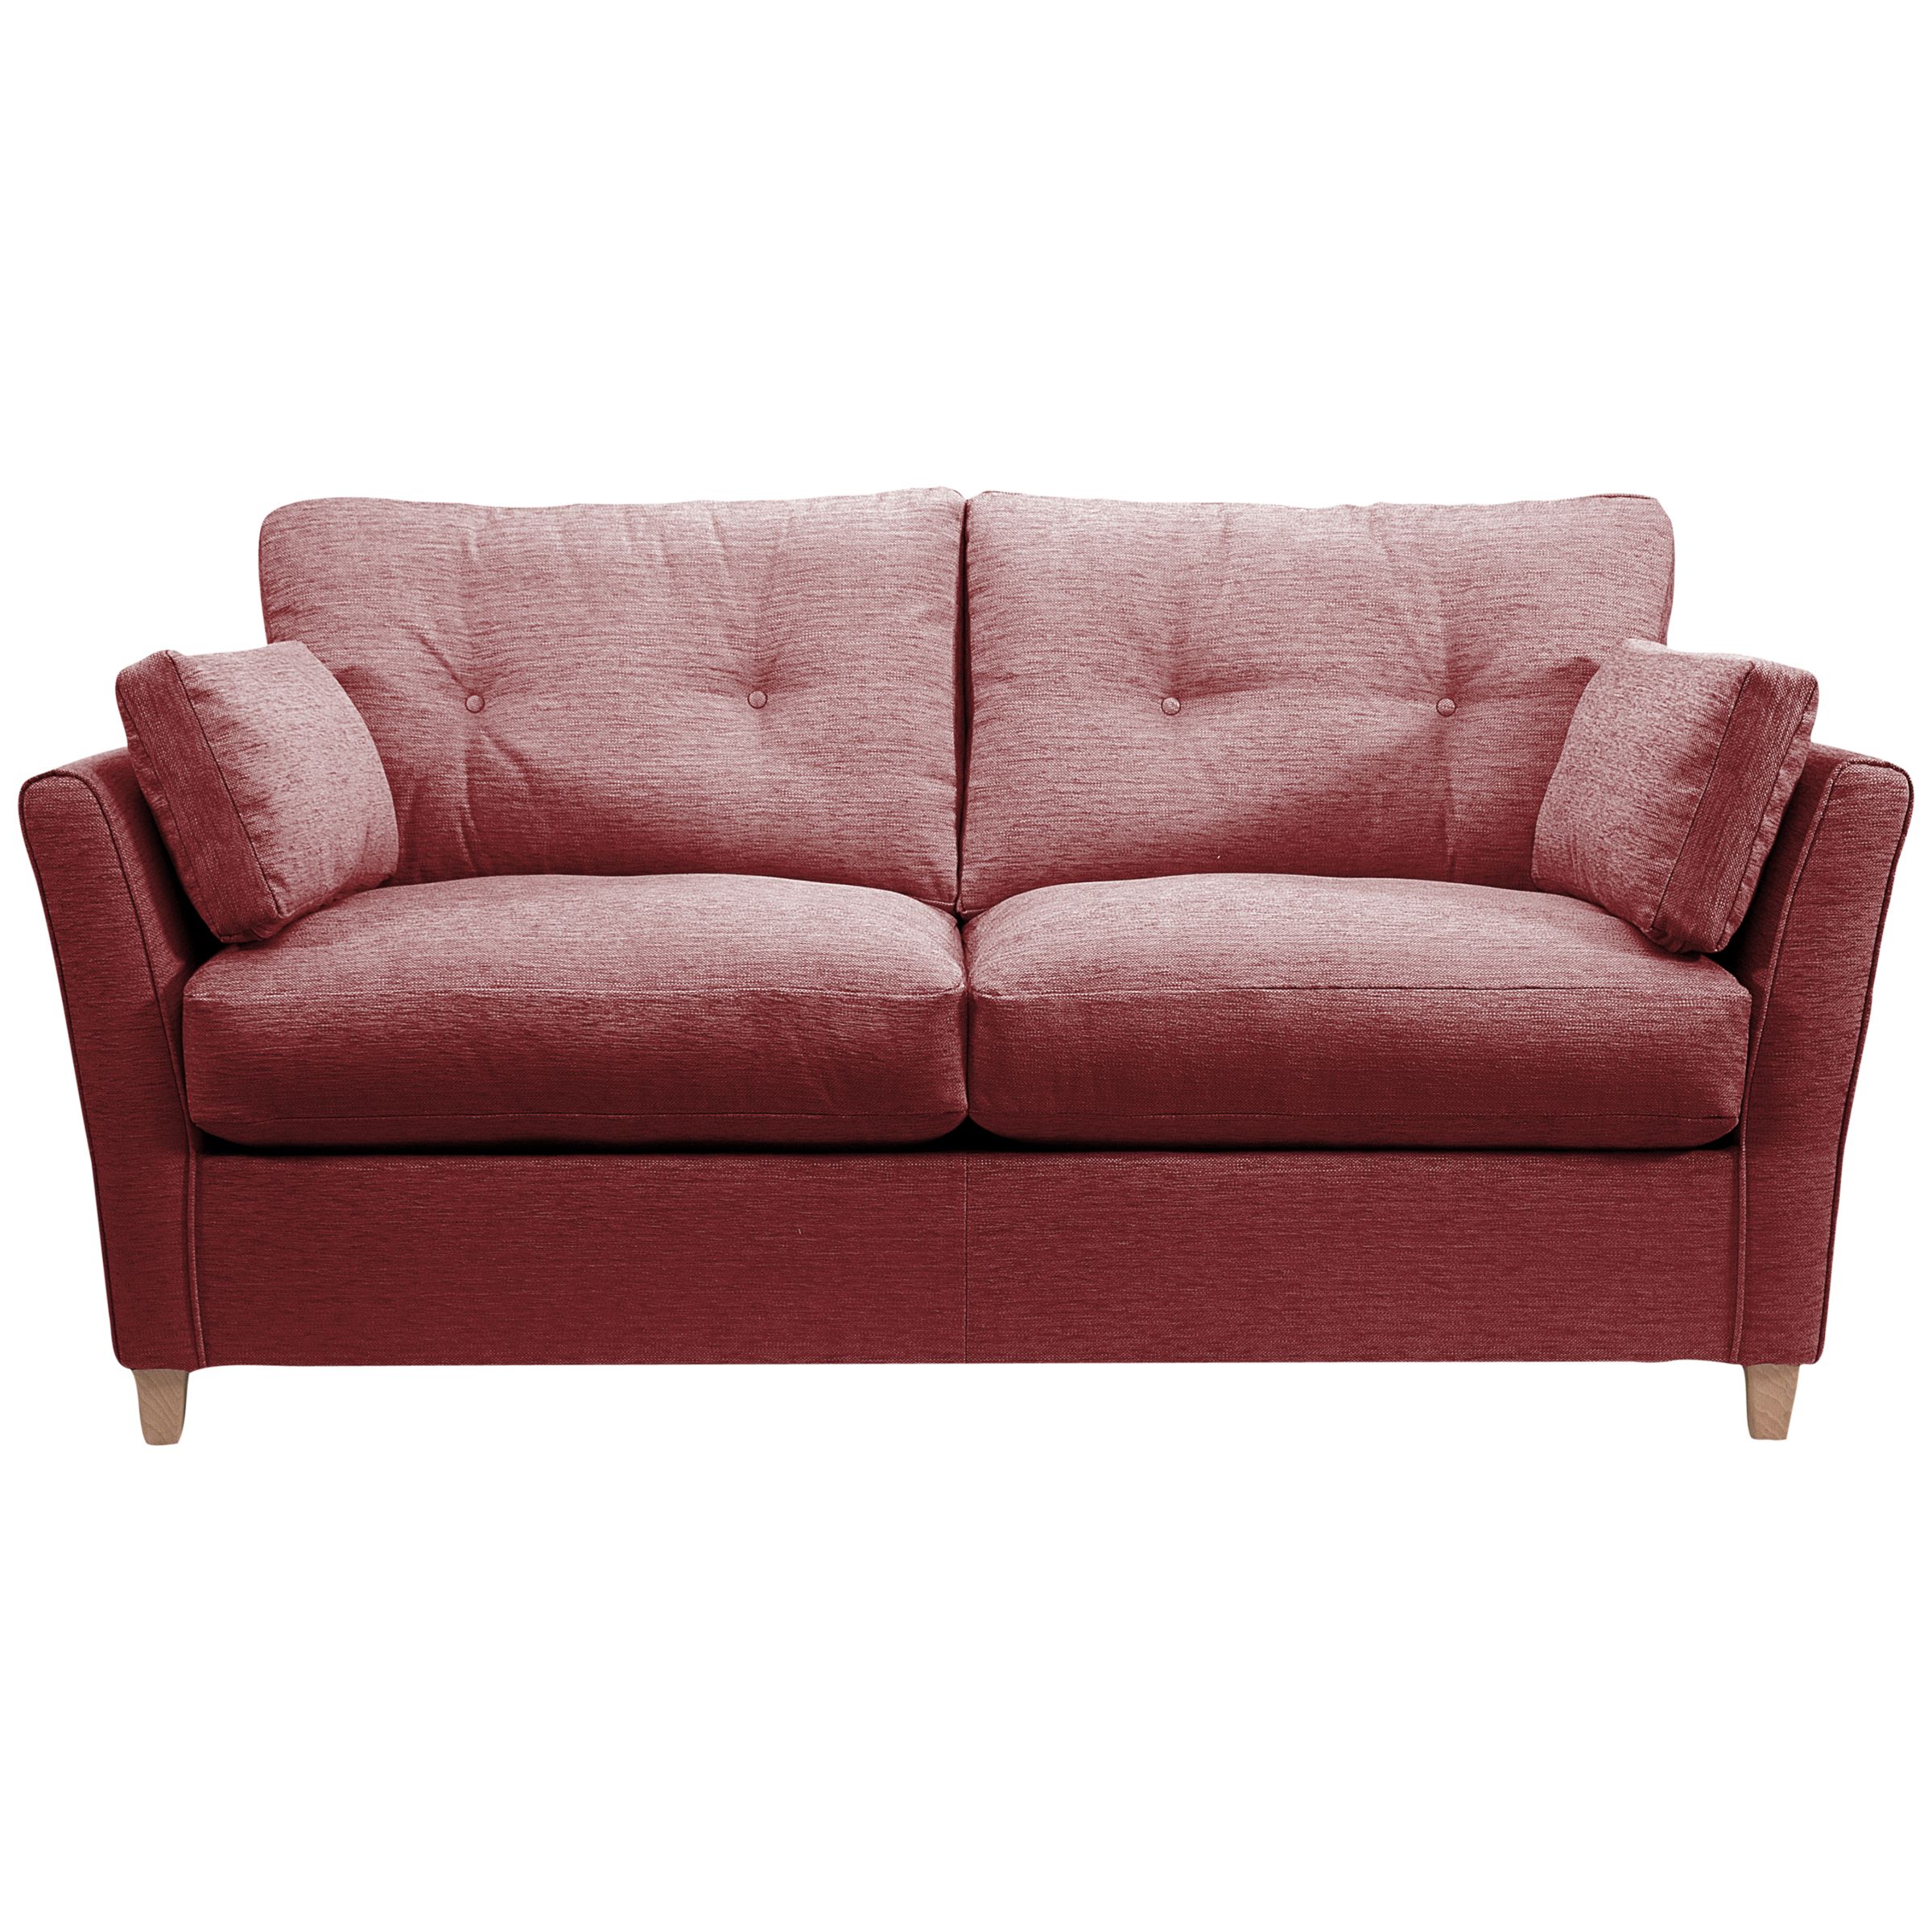 John Lewis Chopin Medium Sofa, Scarlet, width 184cm